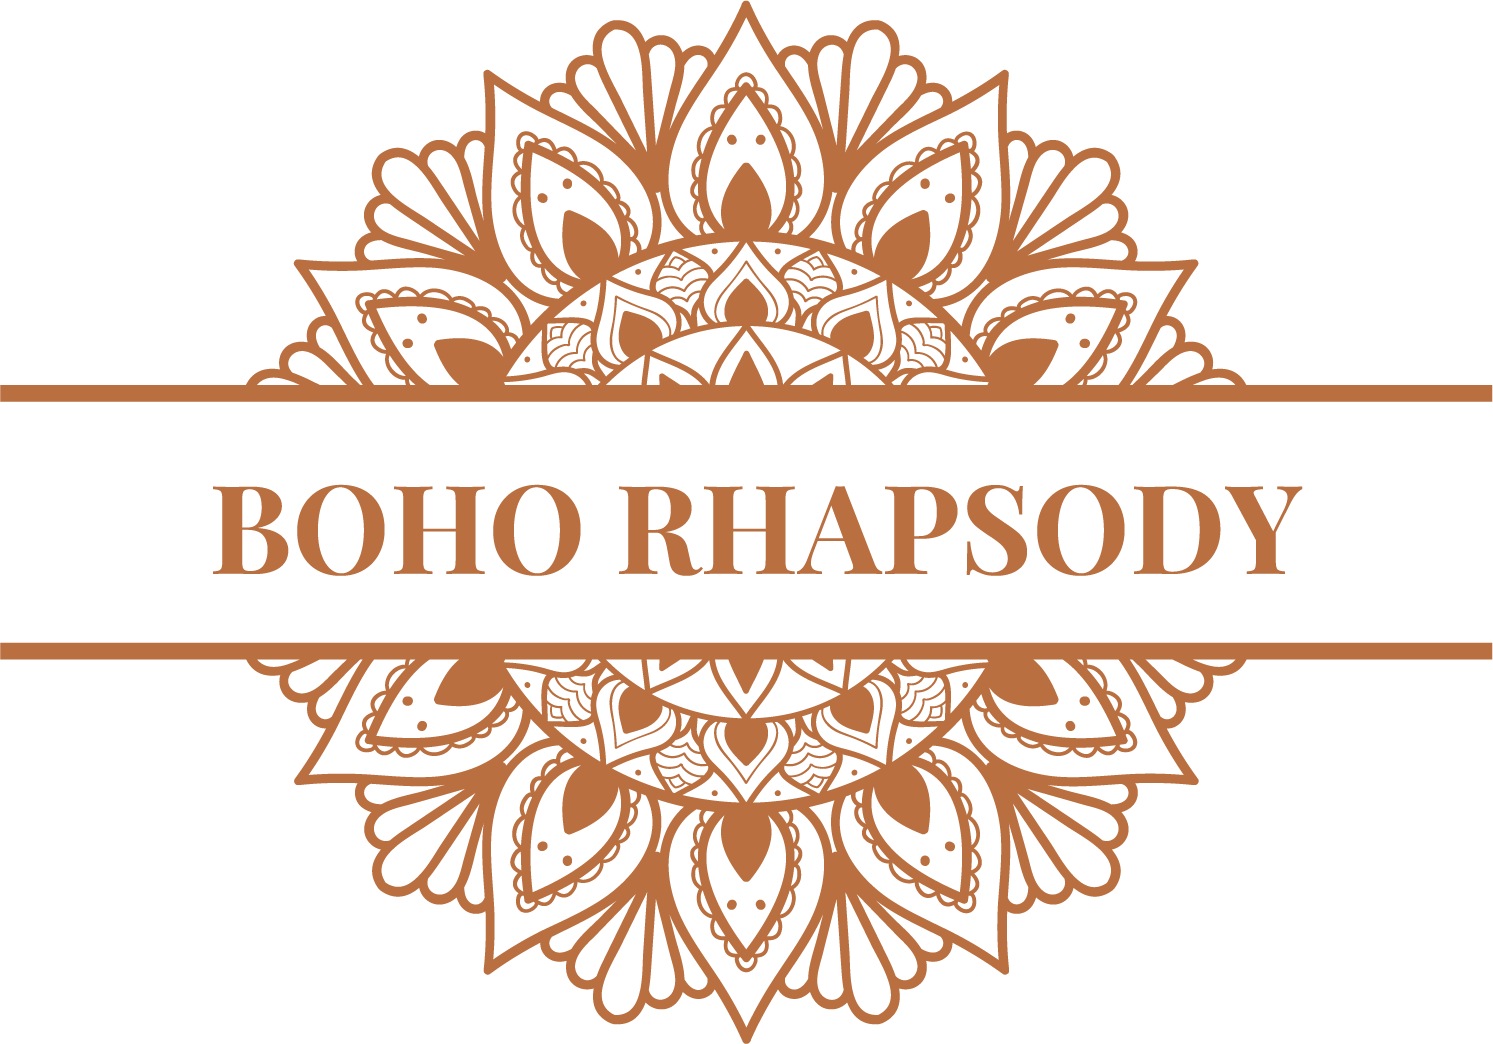 Boho Rhapsody logo